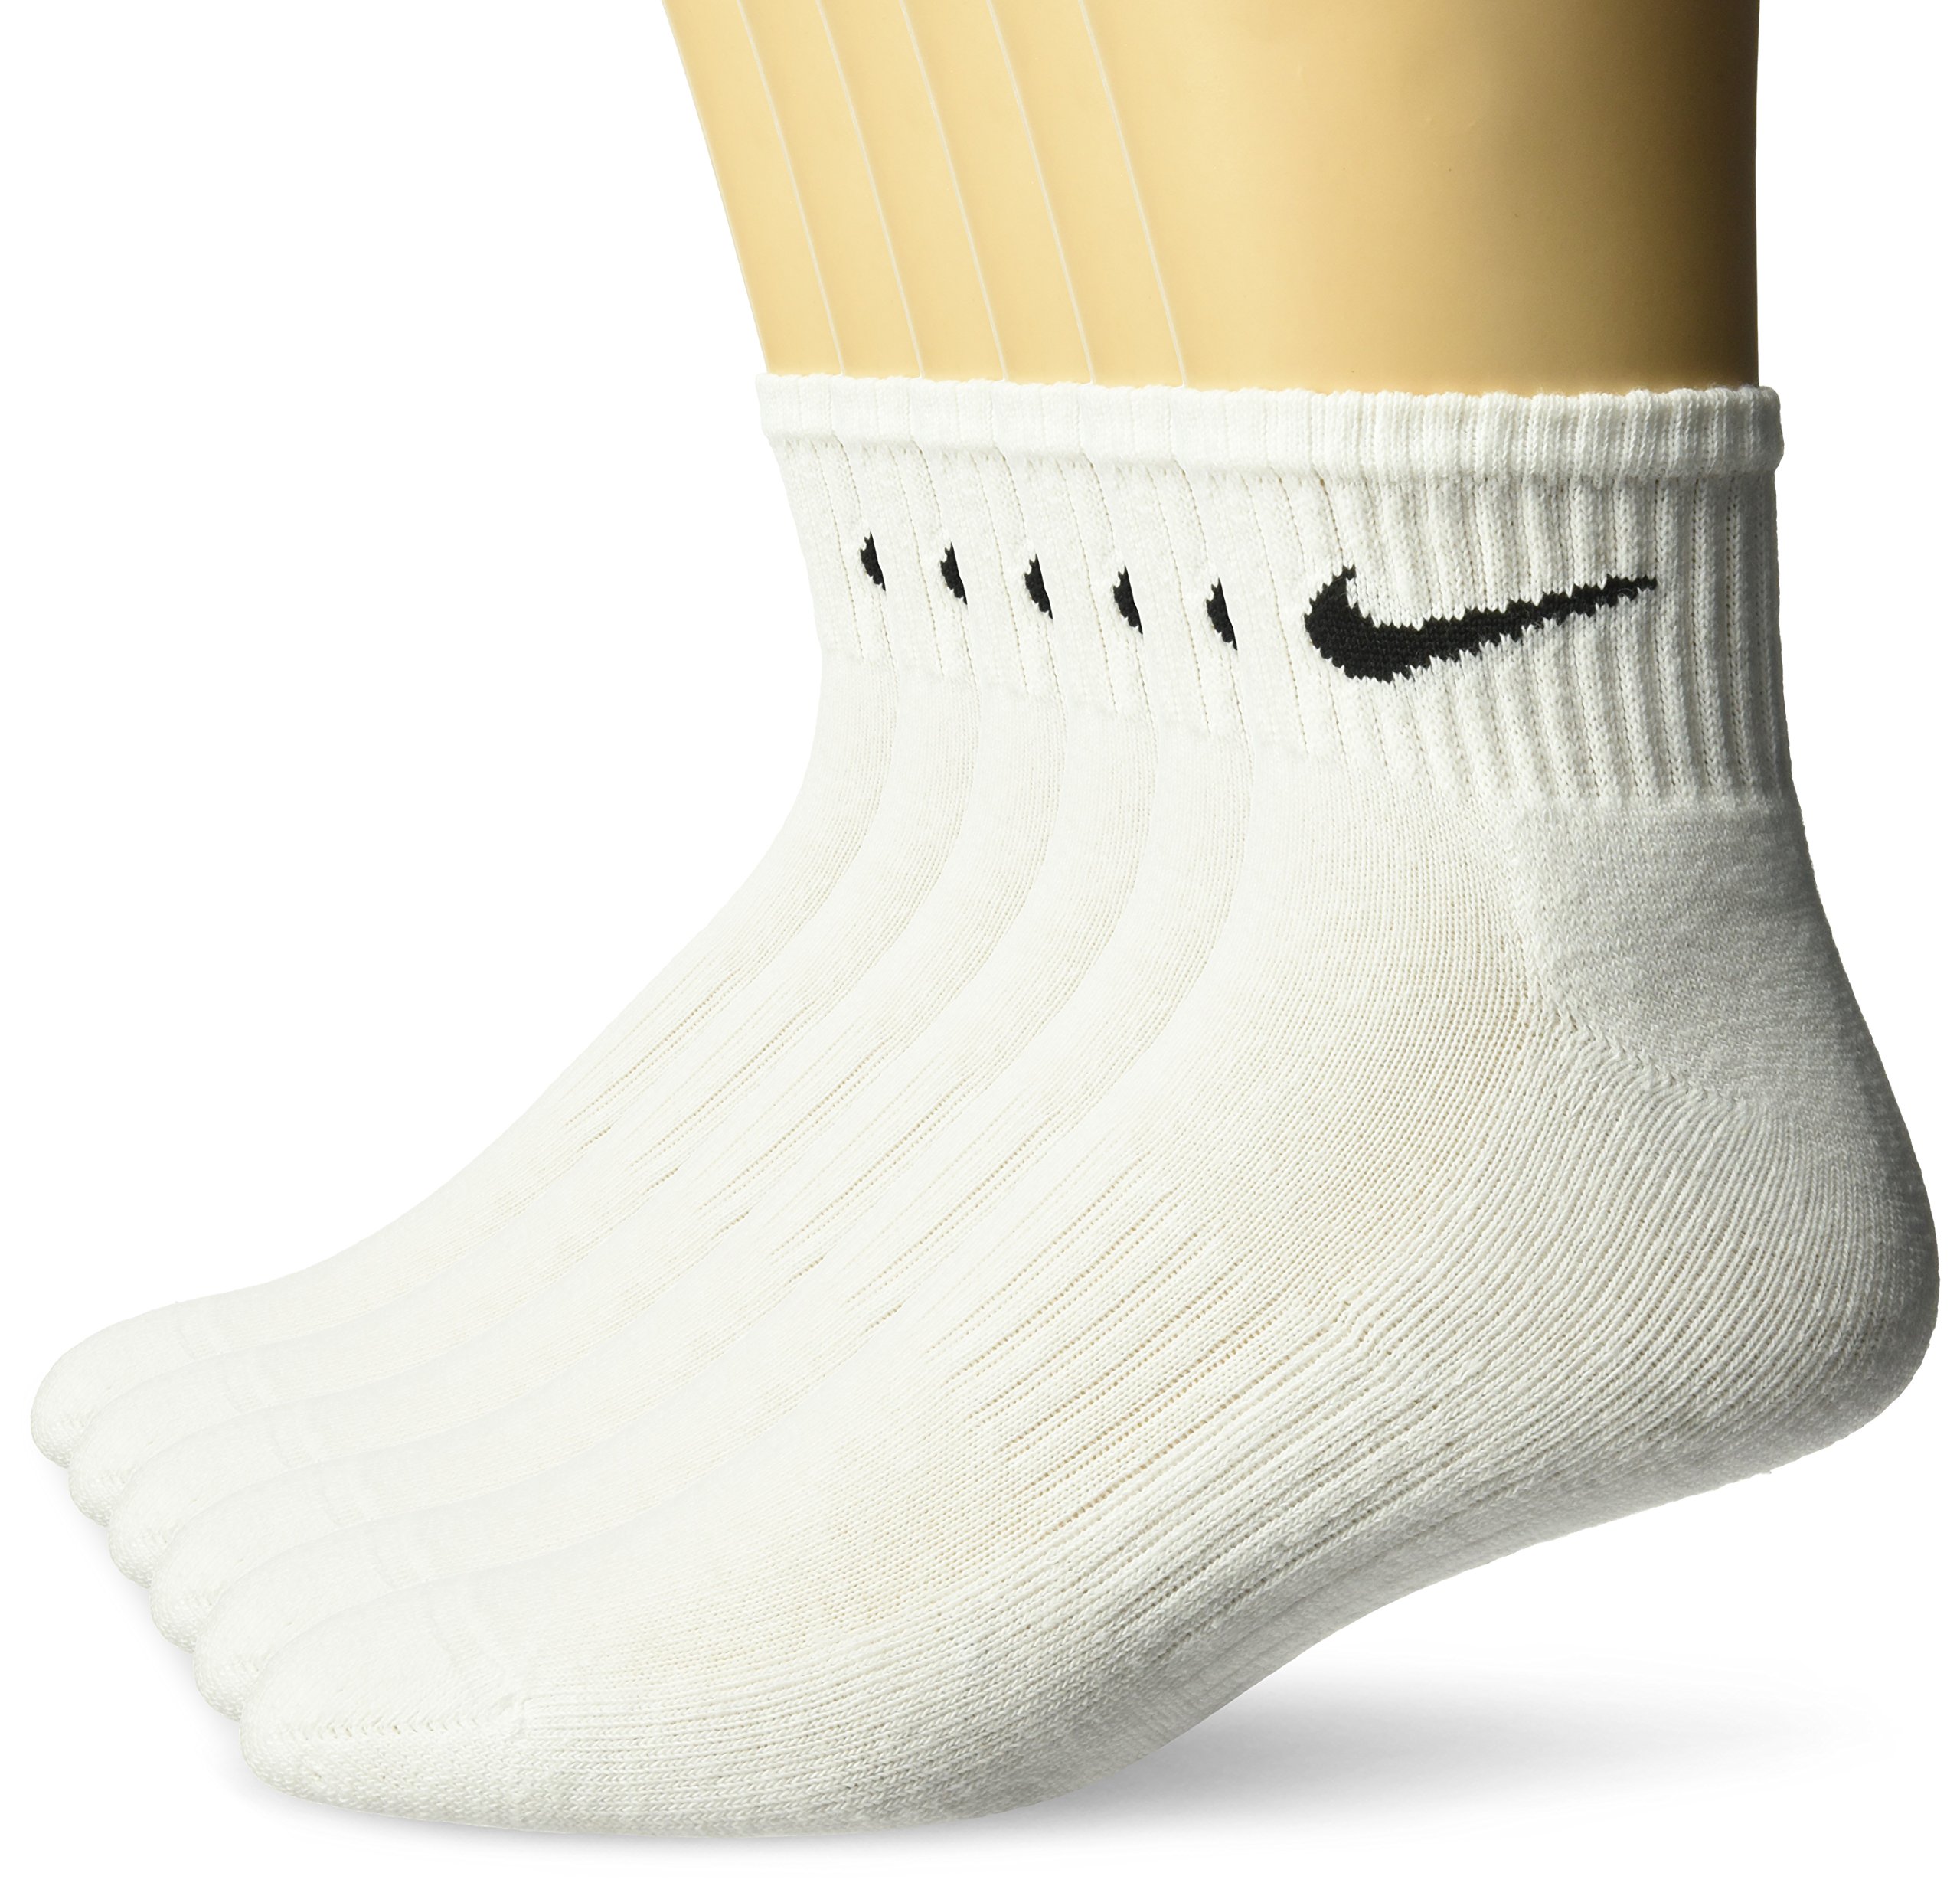 Nike Women's Performance Cushion Quarter Socks with Band (6 Pairs)